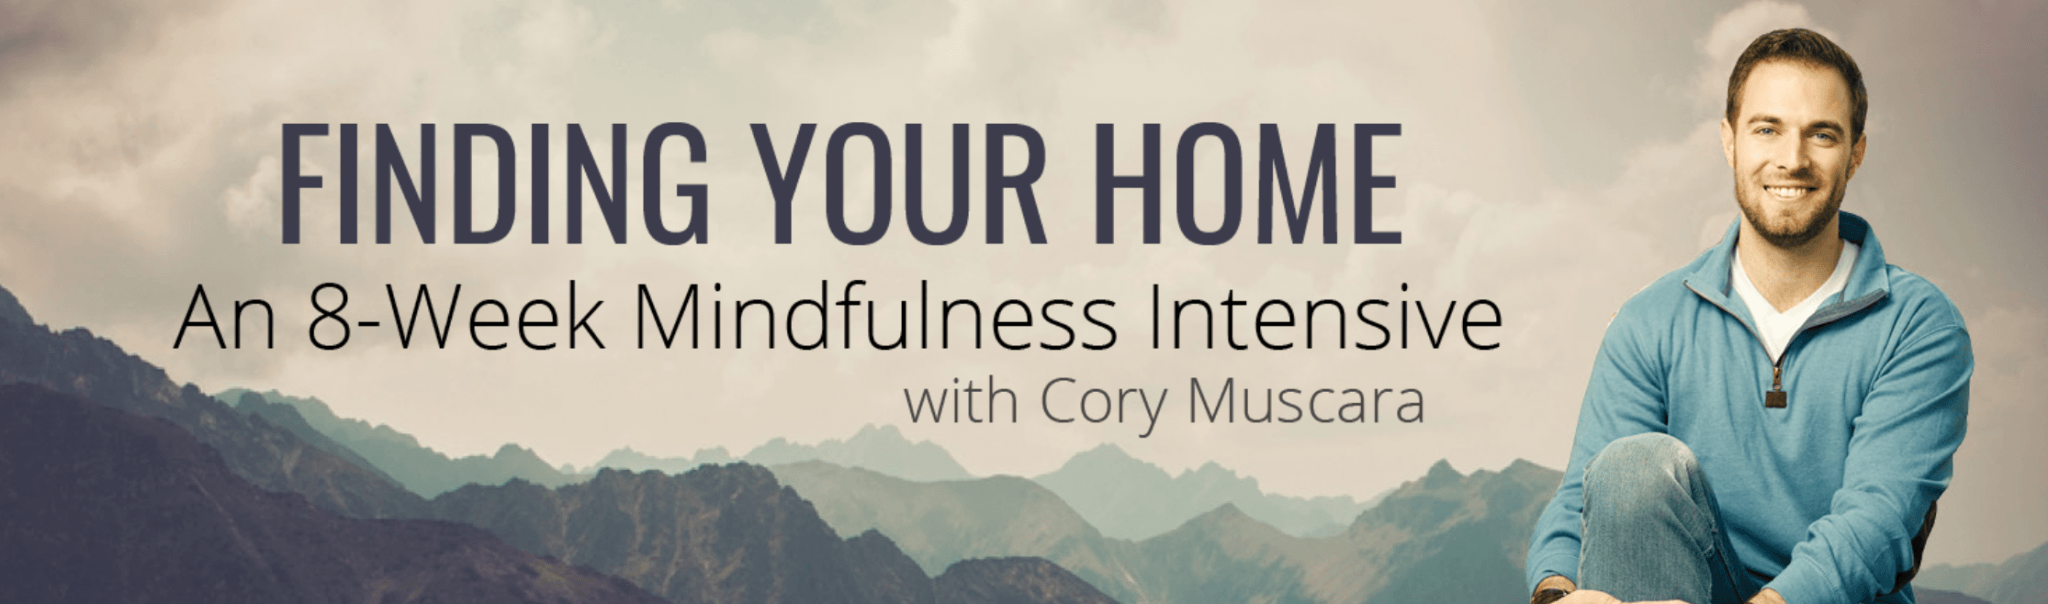 31 Days of Mindfulness Training with Cory Muscara